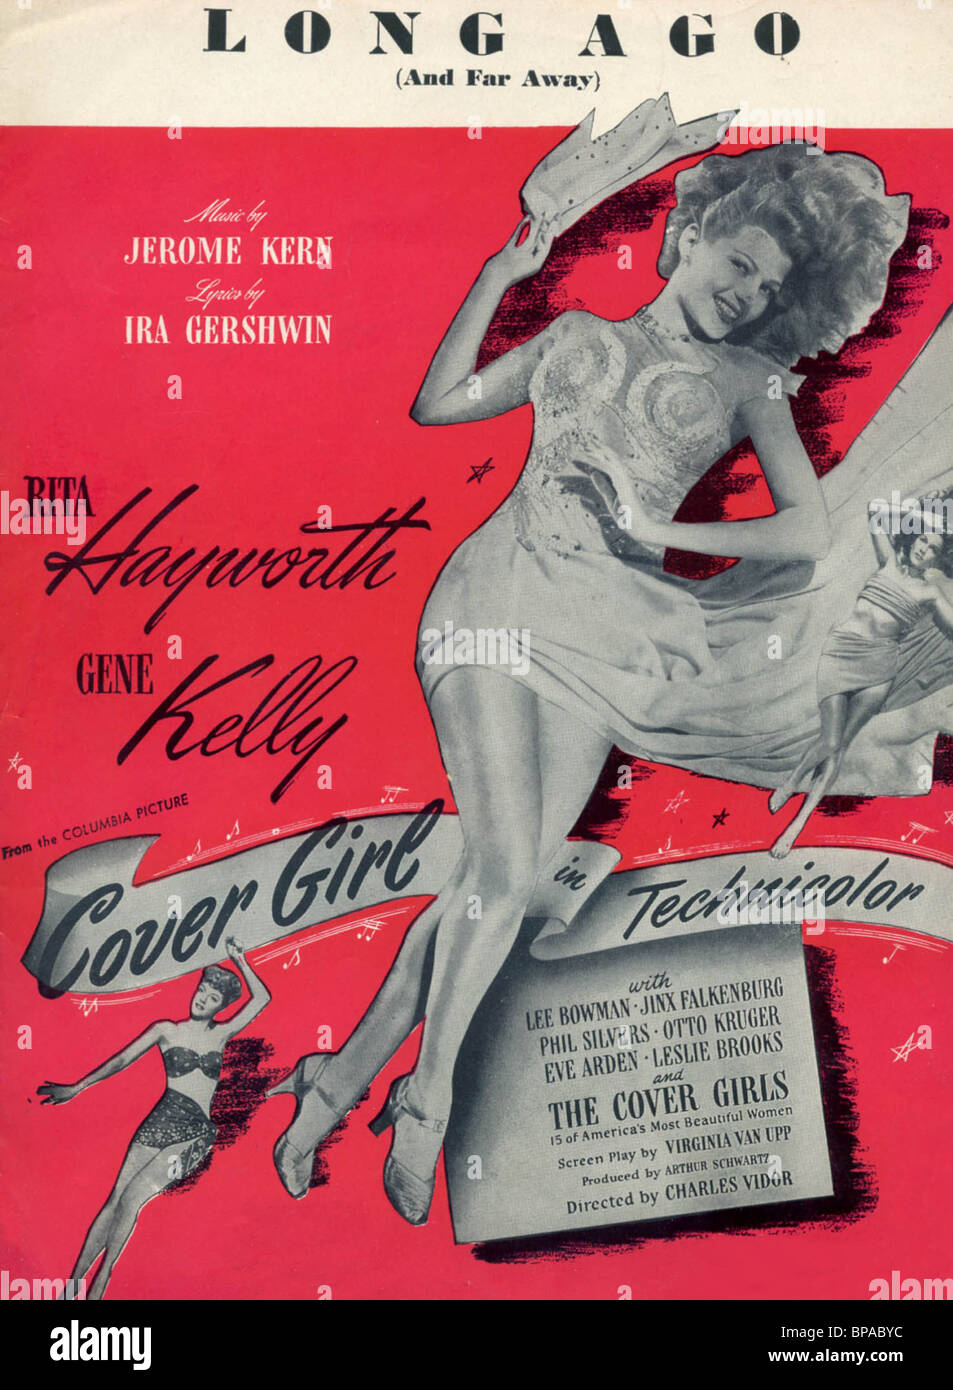 RITA HAYWORTH FILM POSTER COVER GIRL (1944) Stock Photo